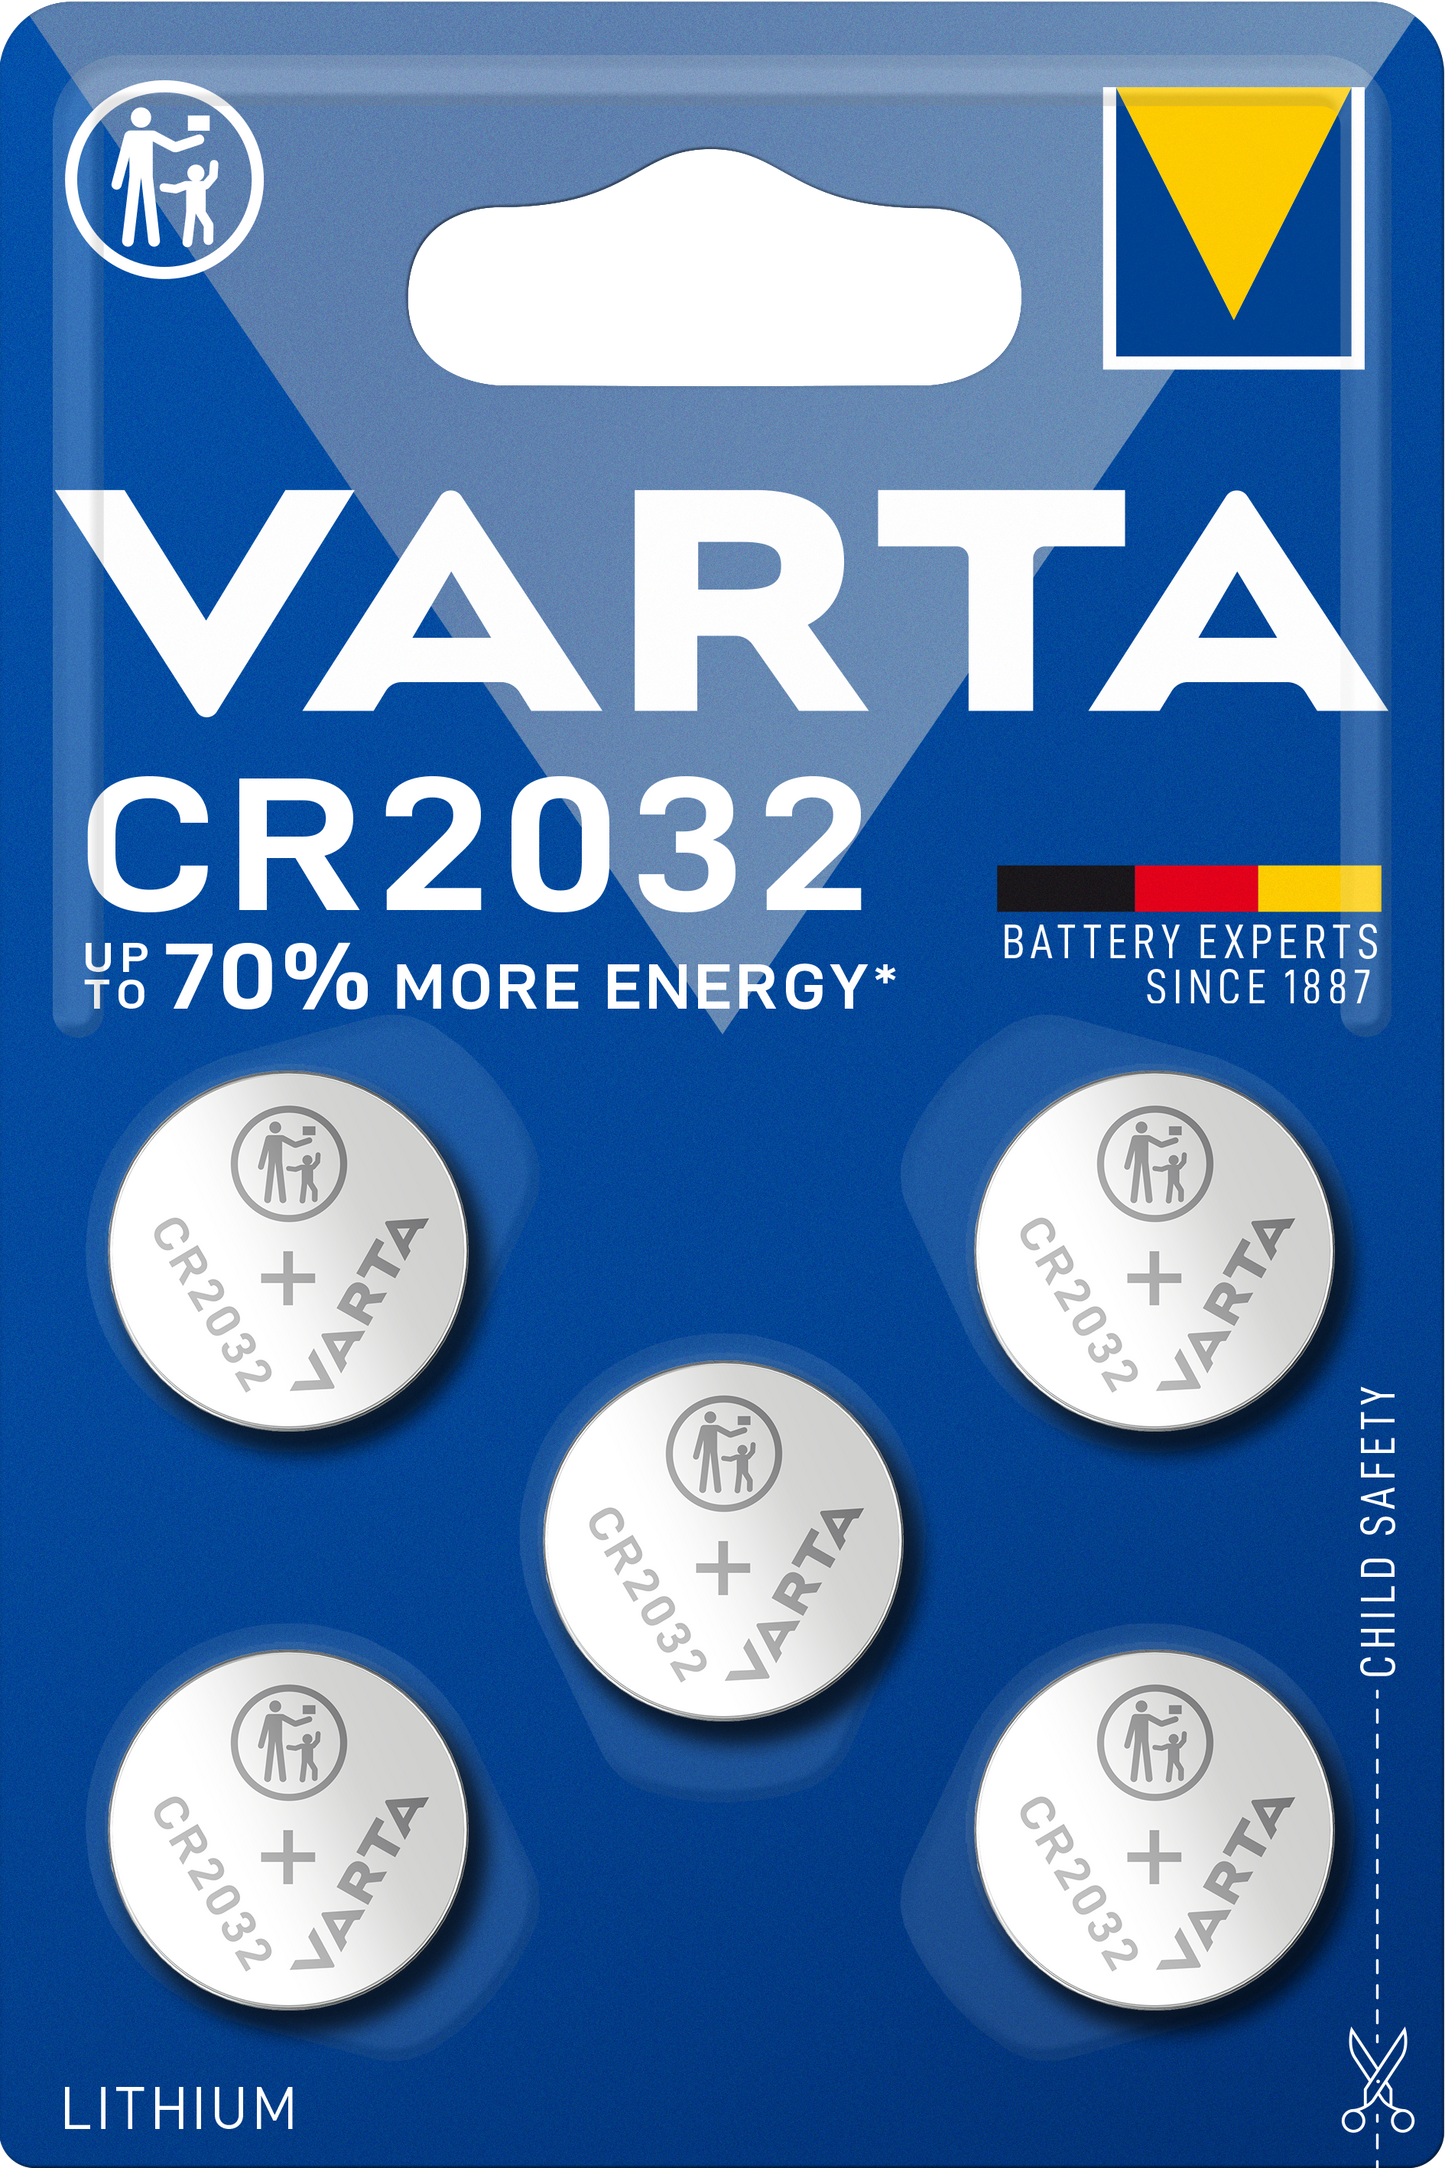 VARTA - Lithium - 2032 Pack of 5